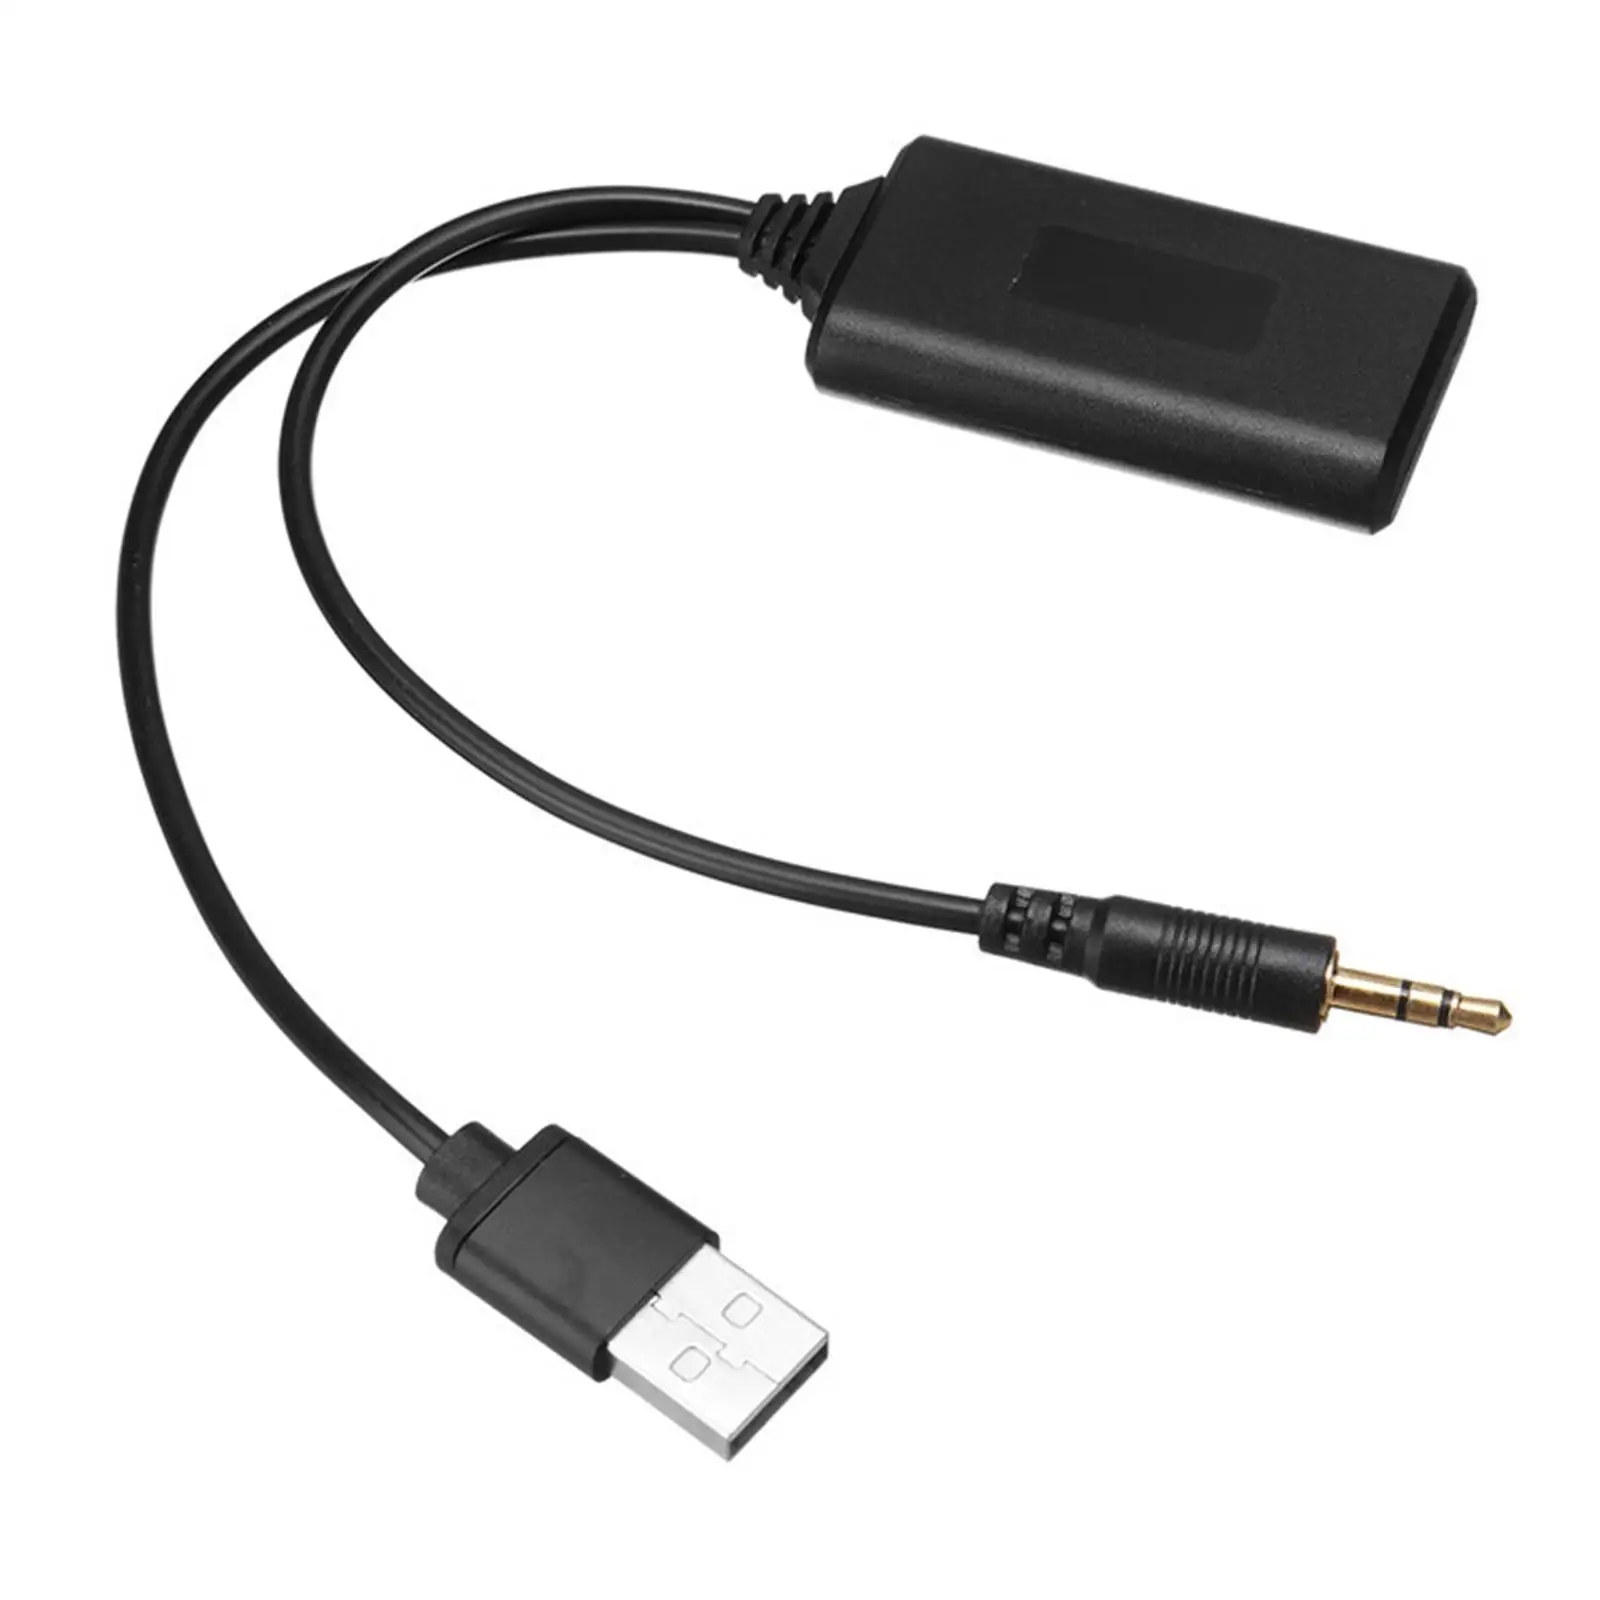 Bluetooth Compatible Music Player Receiver USB 3.5mm Plug AUX Music Audio Receiver for E90 E91 E93 Accessories Black